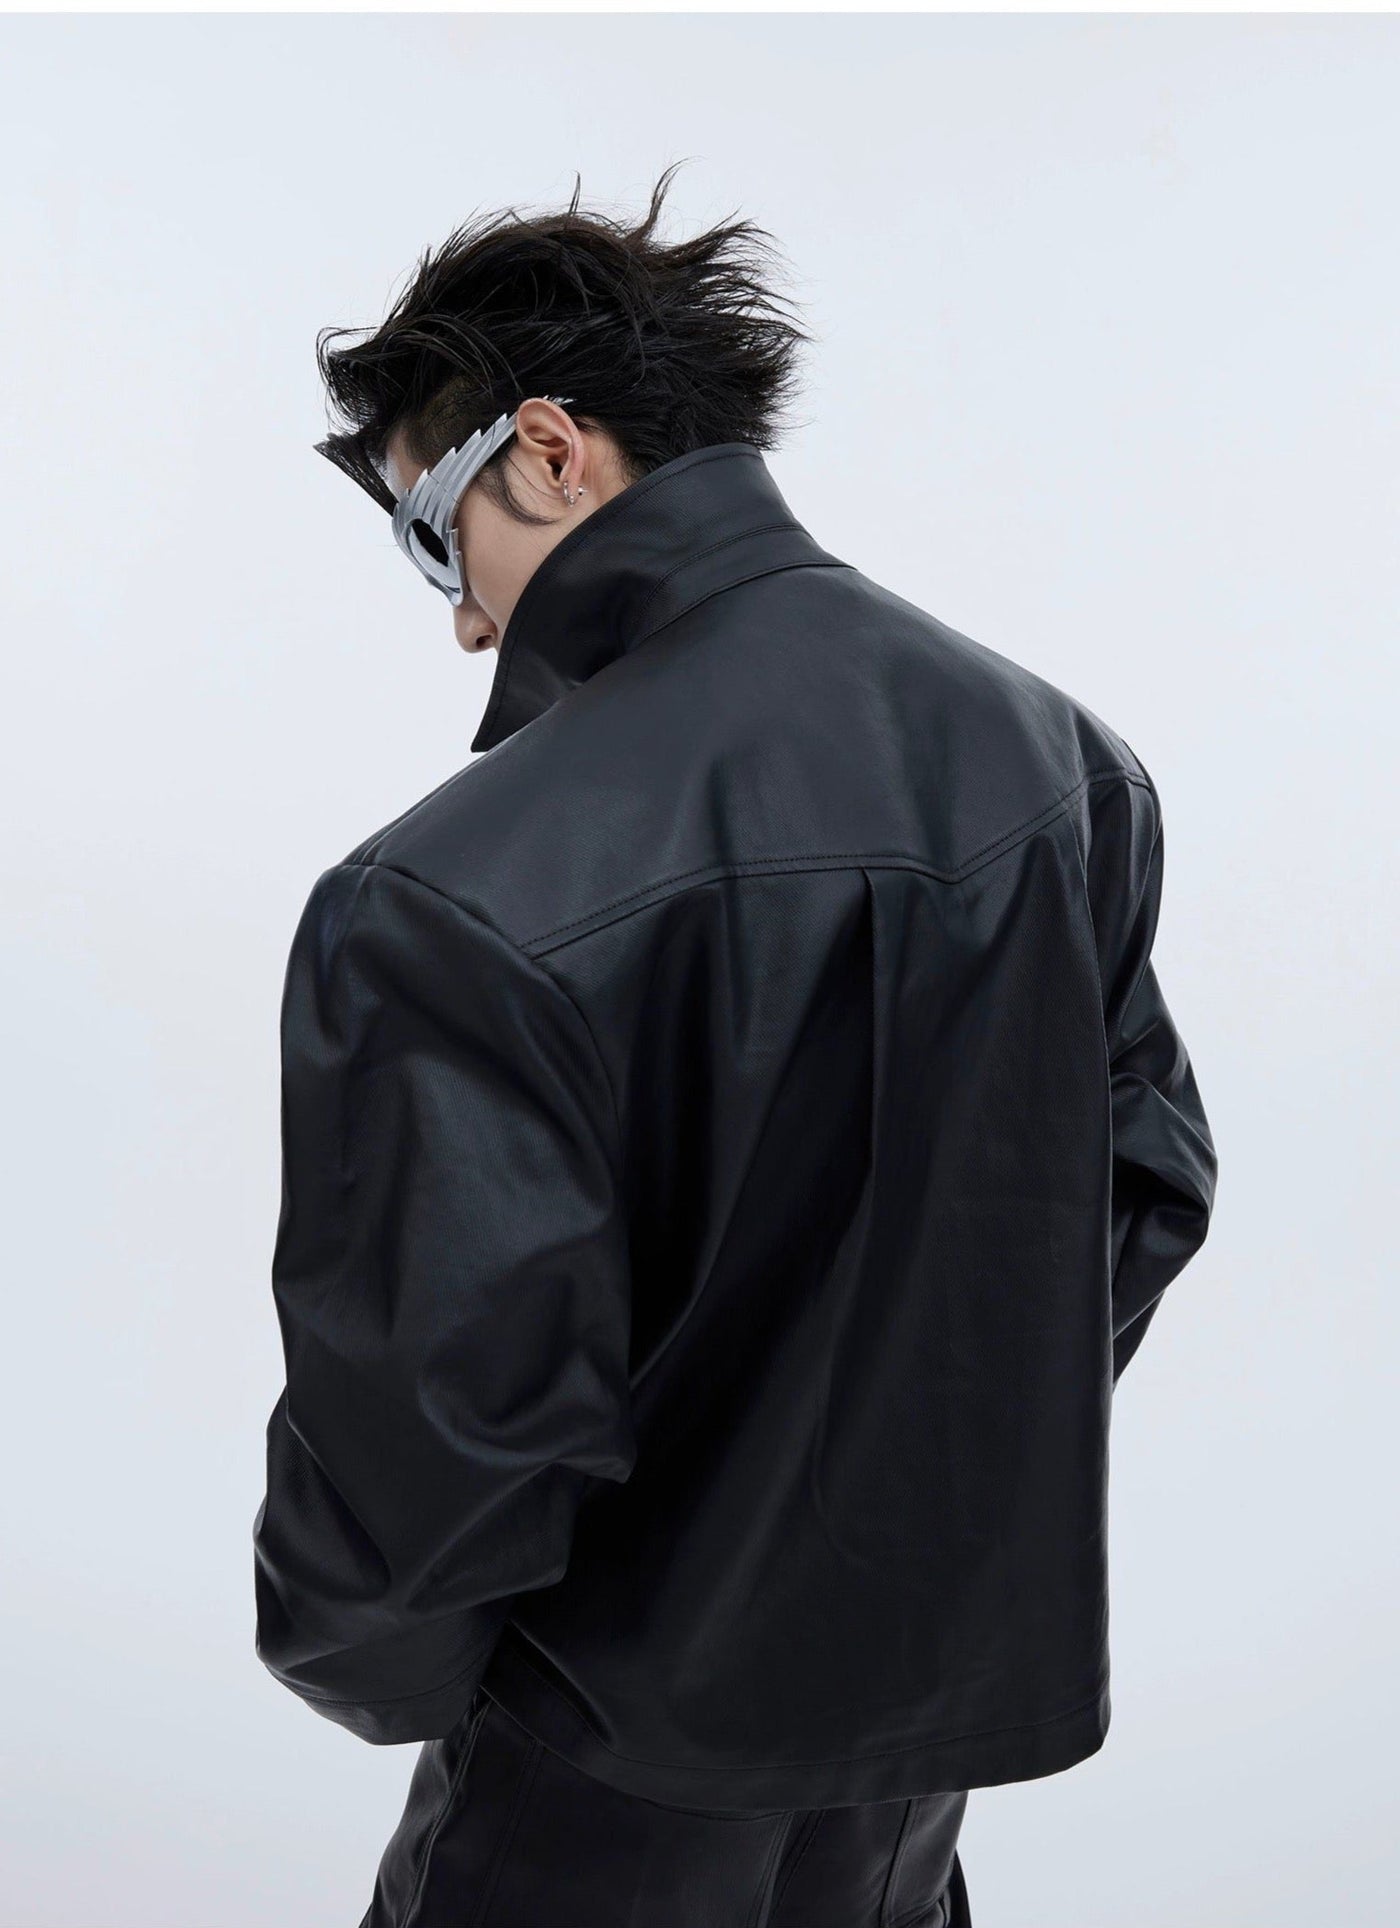 Structured Pocket Leather Jacket & Pants Set Korean Street Fashion Clothing Set By Argue Culture Shop Online at OH Vault